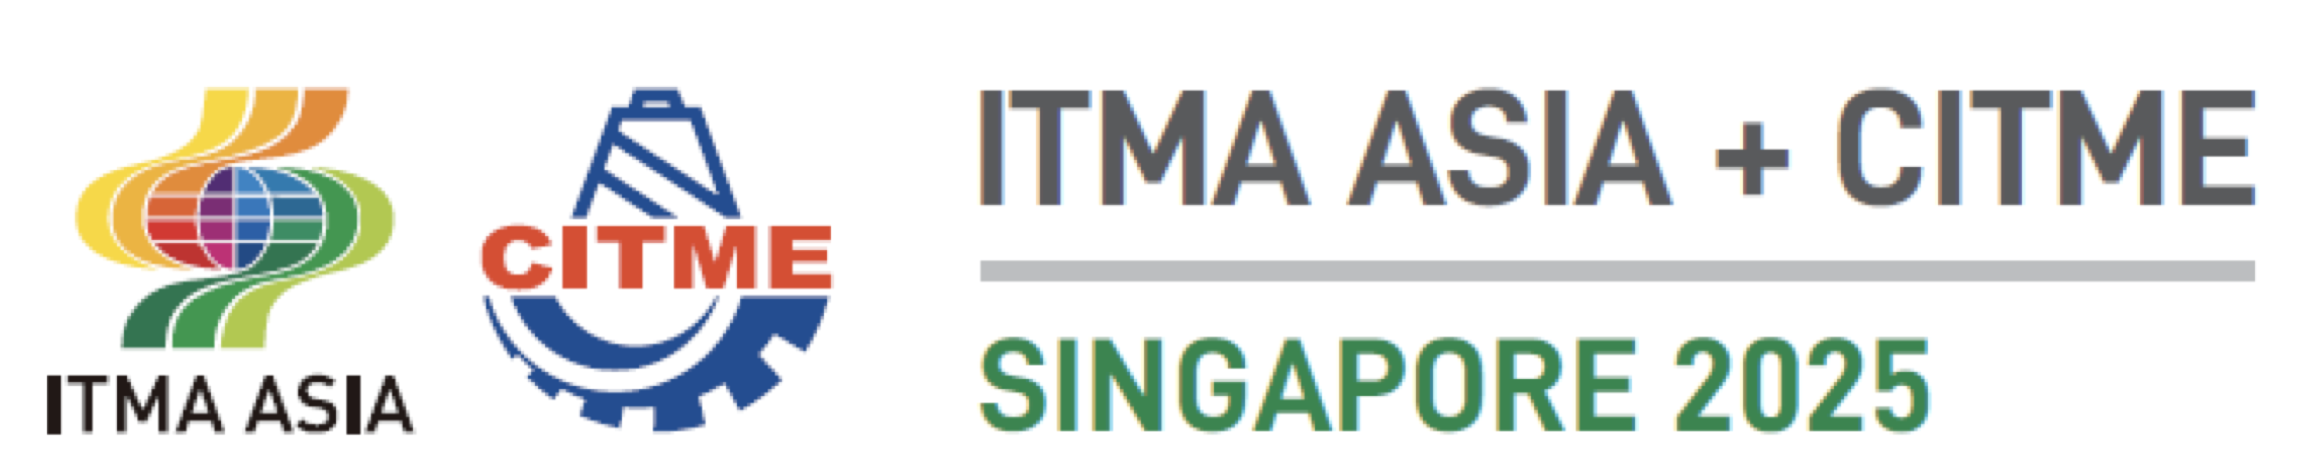 2025 ITMA ASIA + CITME Singapore International Textile Machinery Exhibition